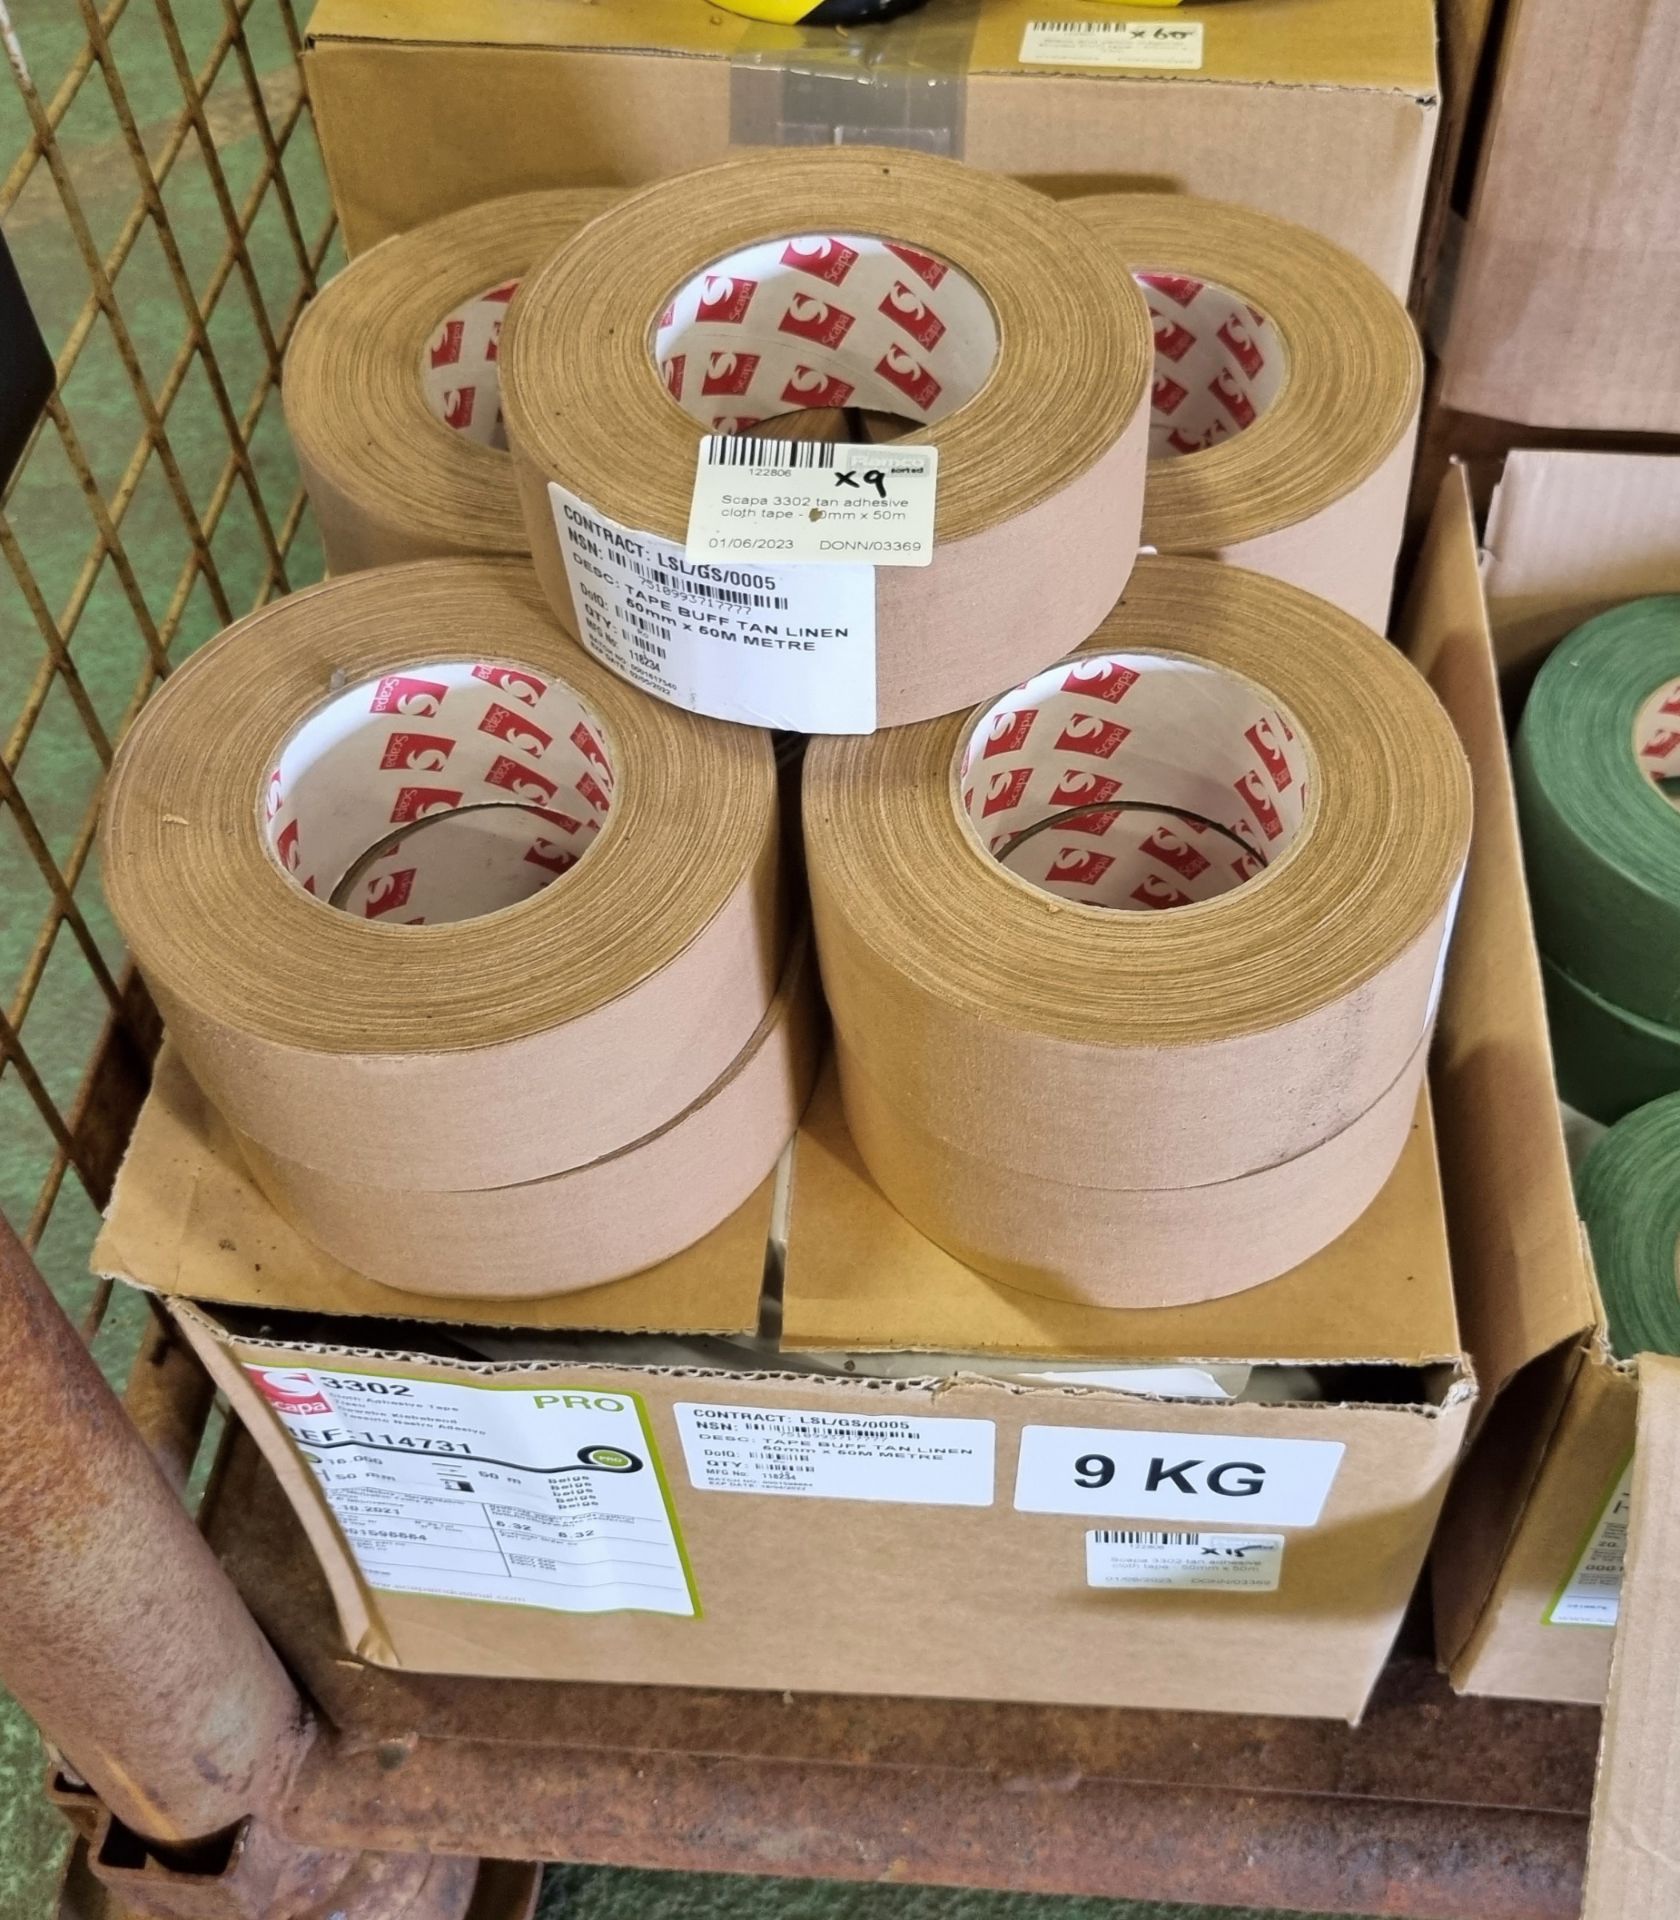 24x rolls of Scapa 3302 tan adhesive cloth tape - 50mm x 50m, 124x rolls of Self adhesive tape - Bild 6 aus 10